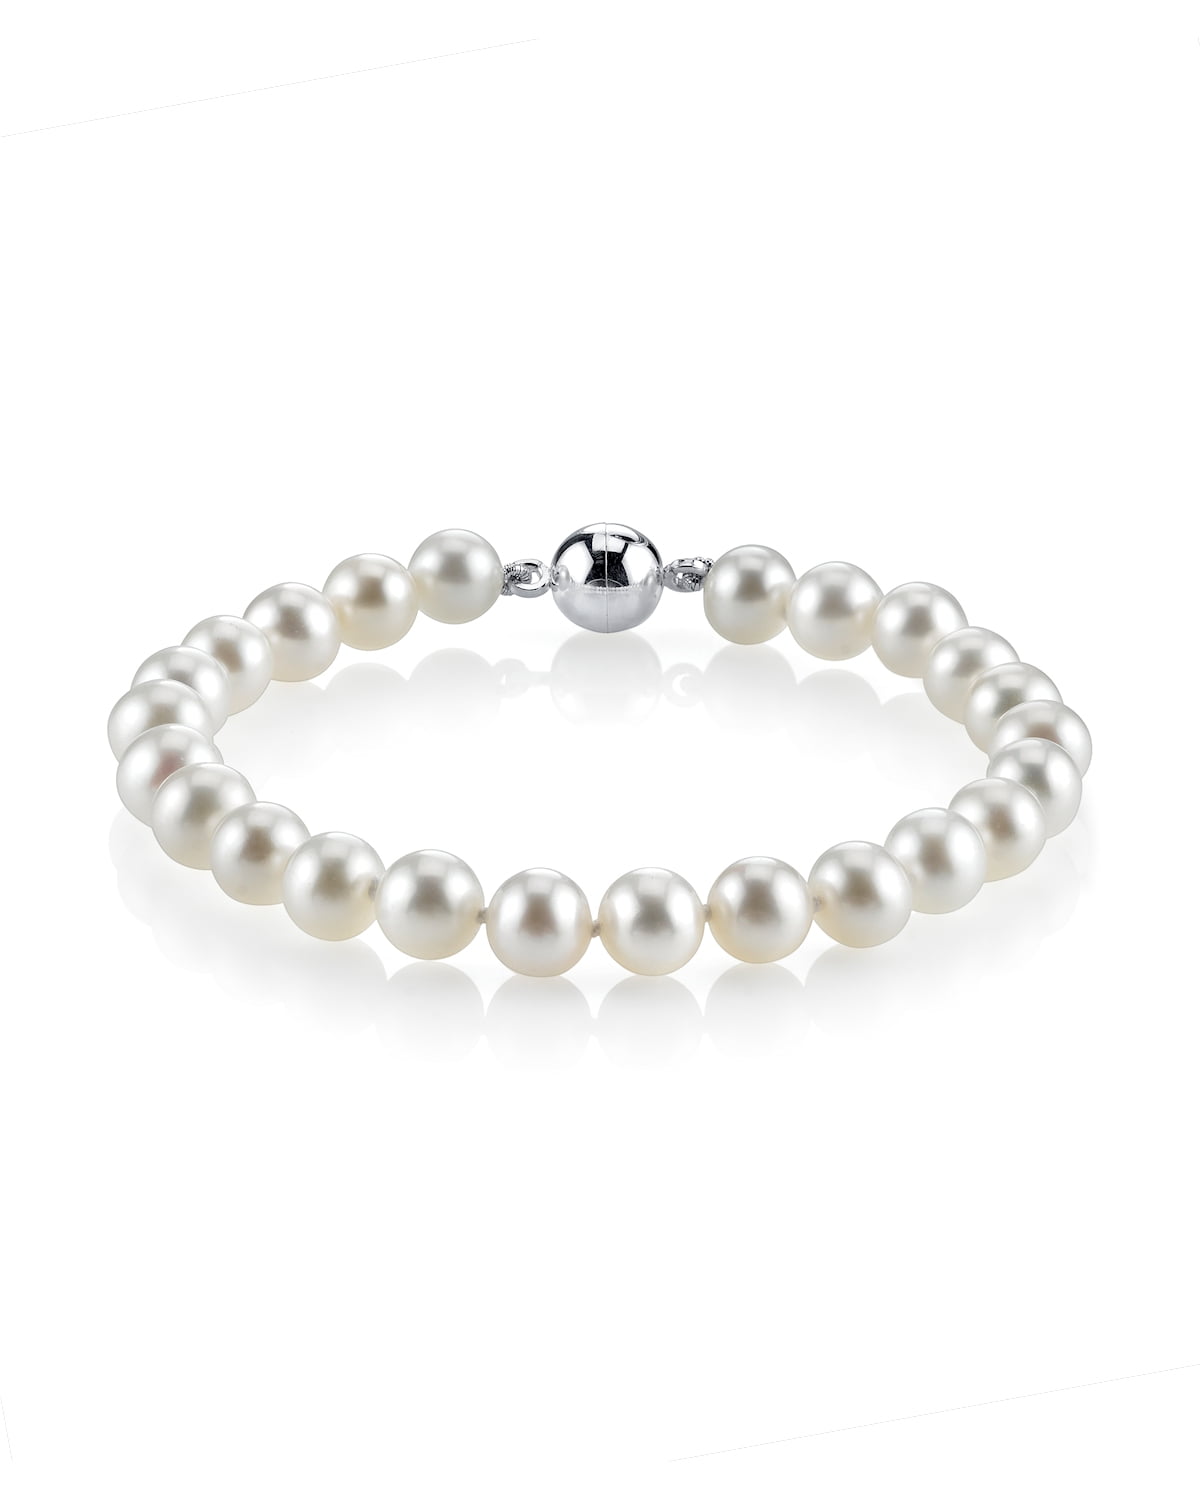 freshwater pearl bracelet genuine pearl bracelet gift for her nugget pearl bracelet with sterling silver minimalist bracelet wedding